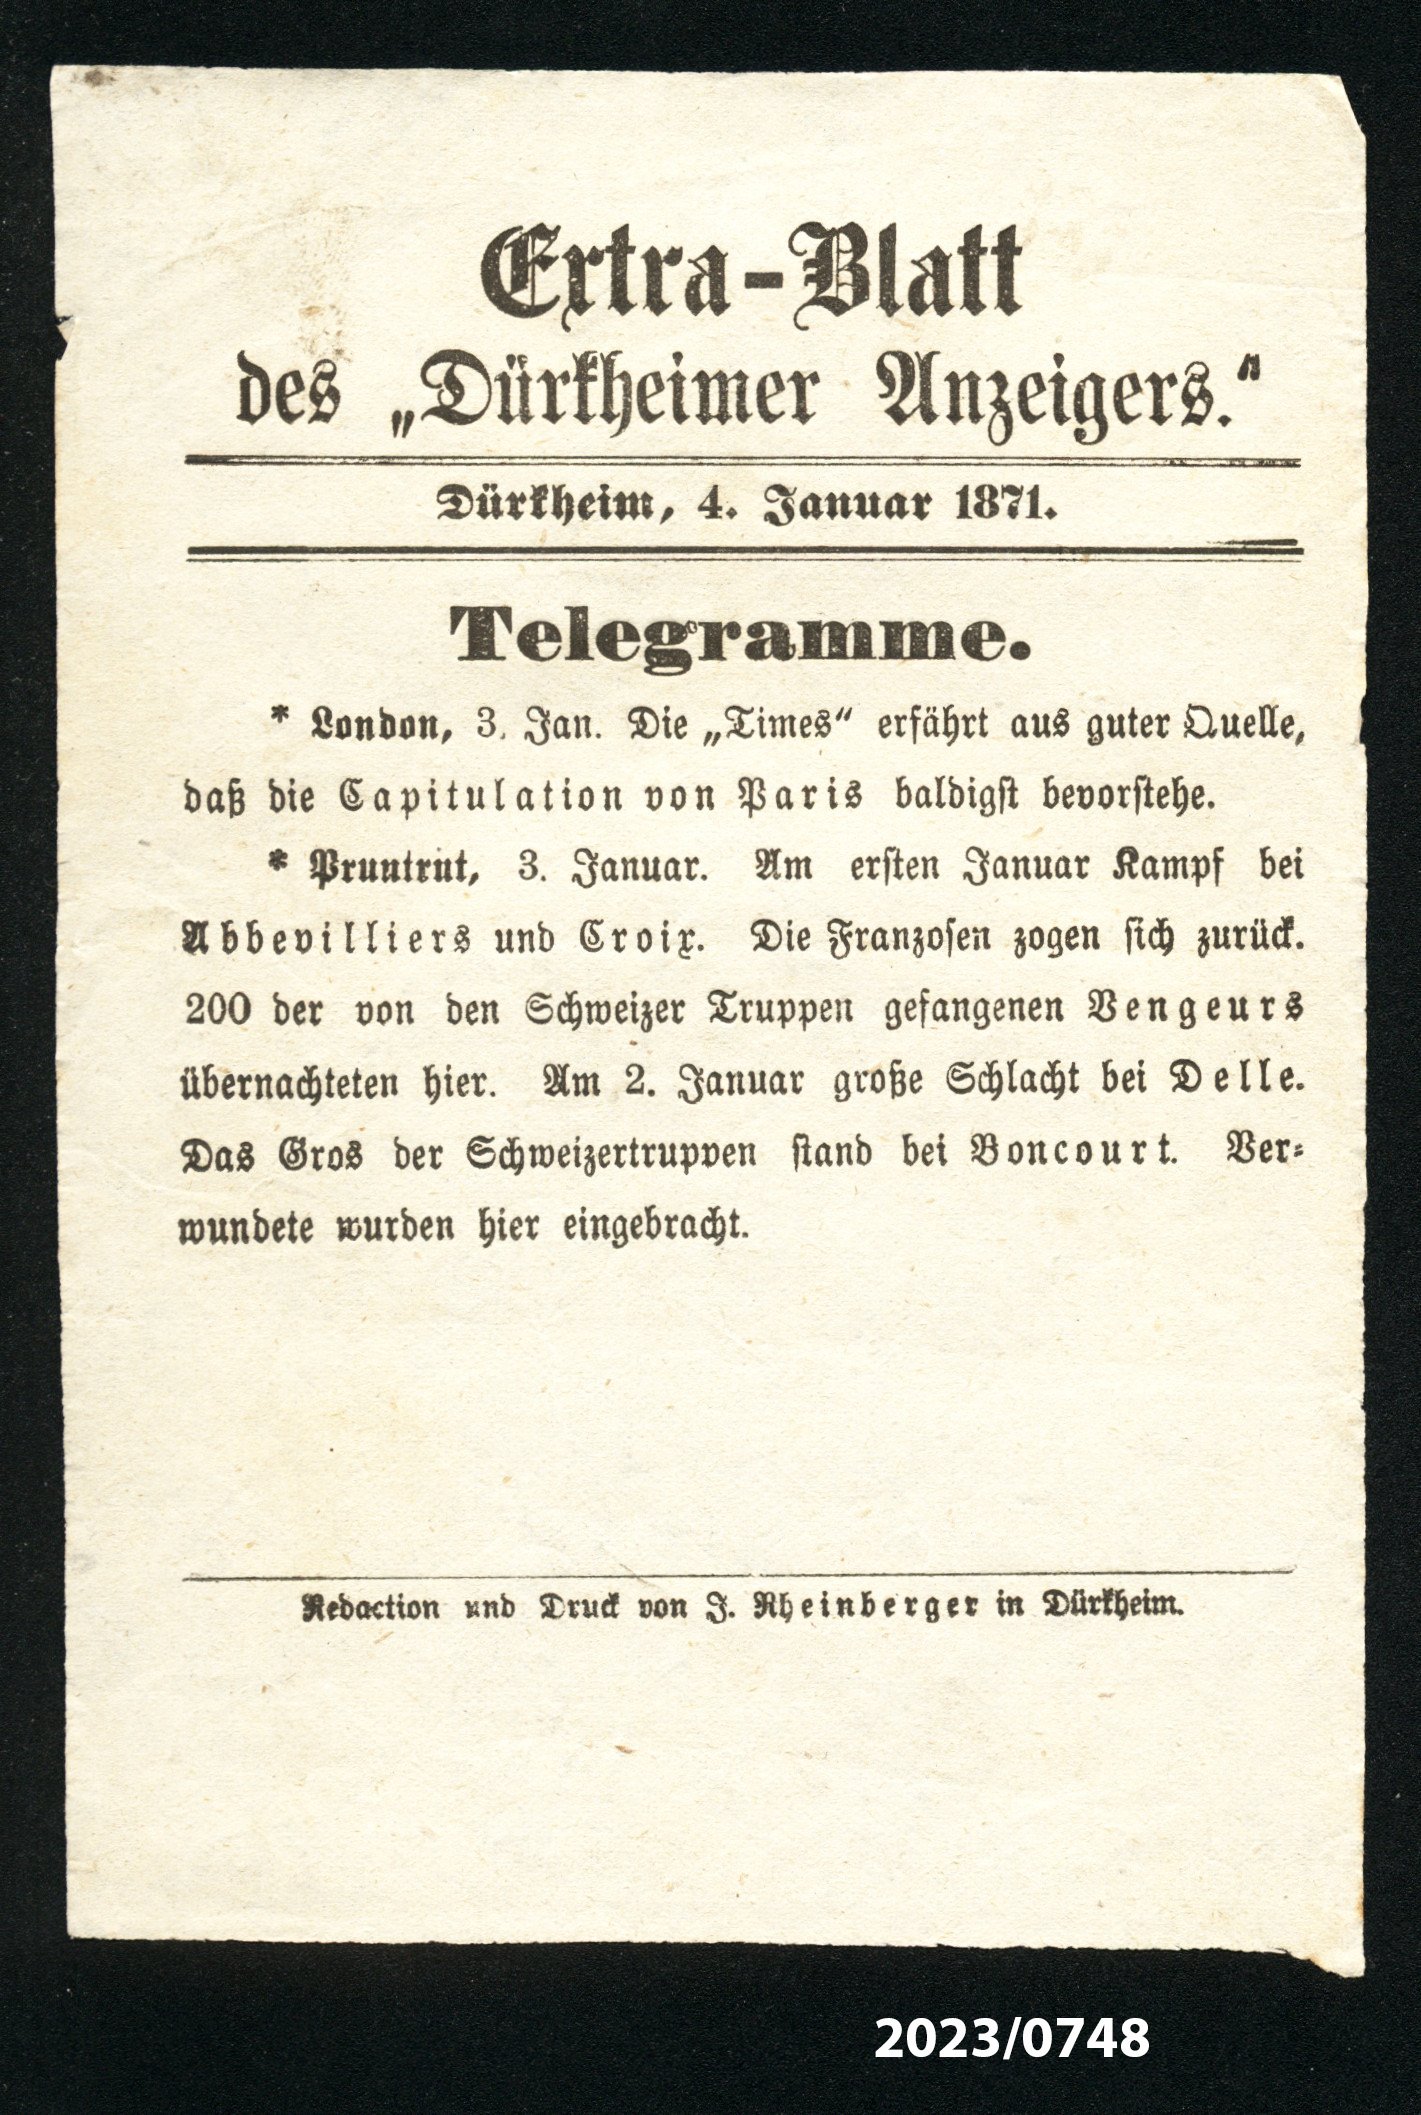 Extra-Blatt des "Dürkheimer Anzeigers." 4.1.1871 (Stadtmuseum Bad Dürkheim im Kulturzentrum Haus Catoir CC BY-NC-SA)